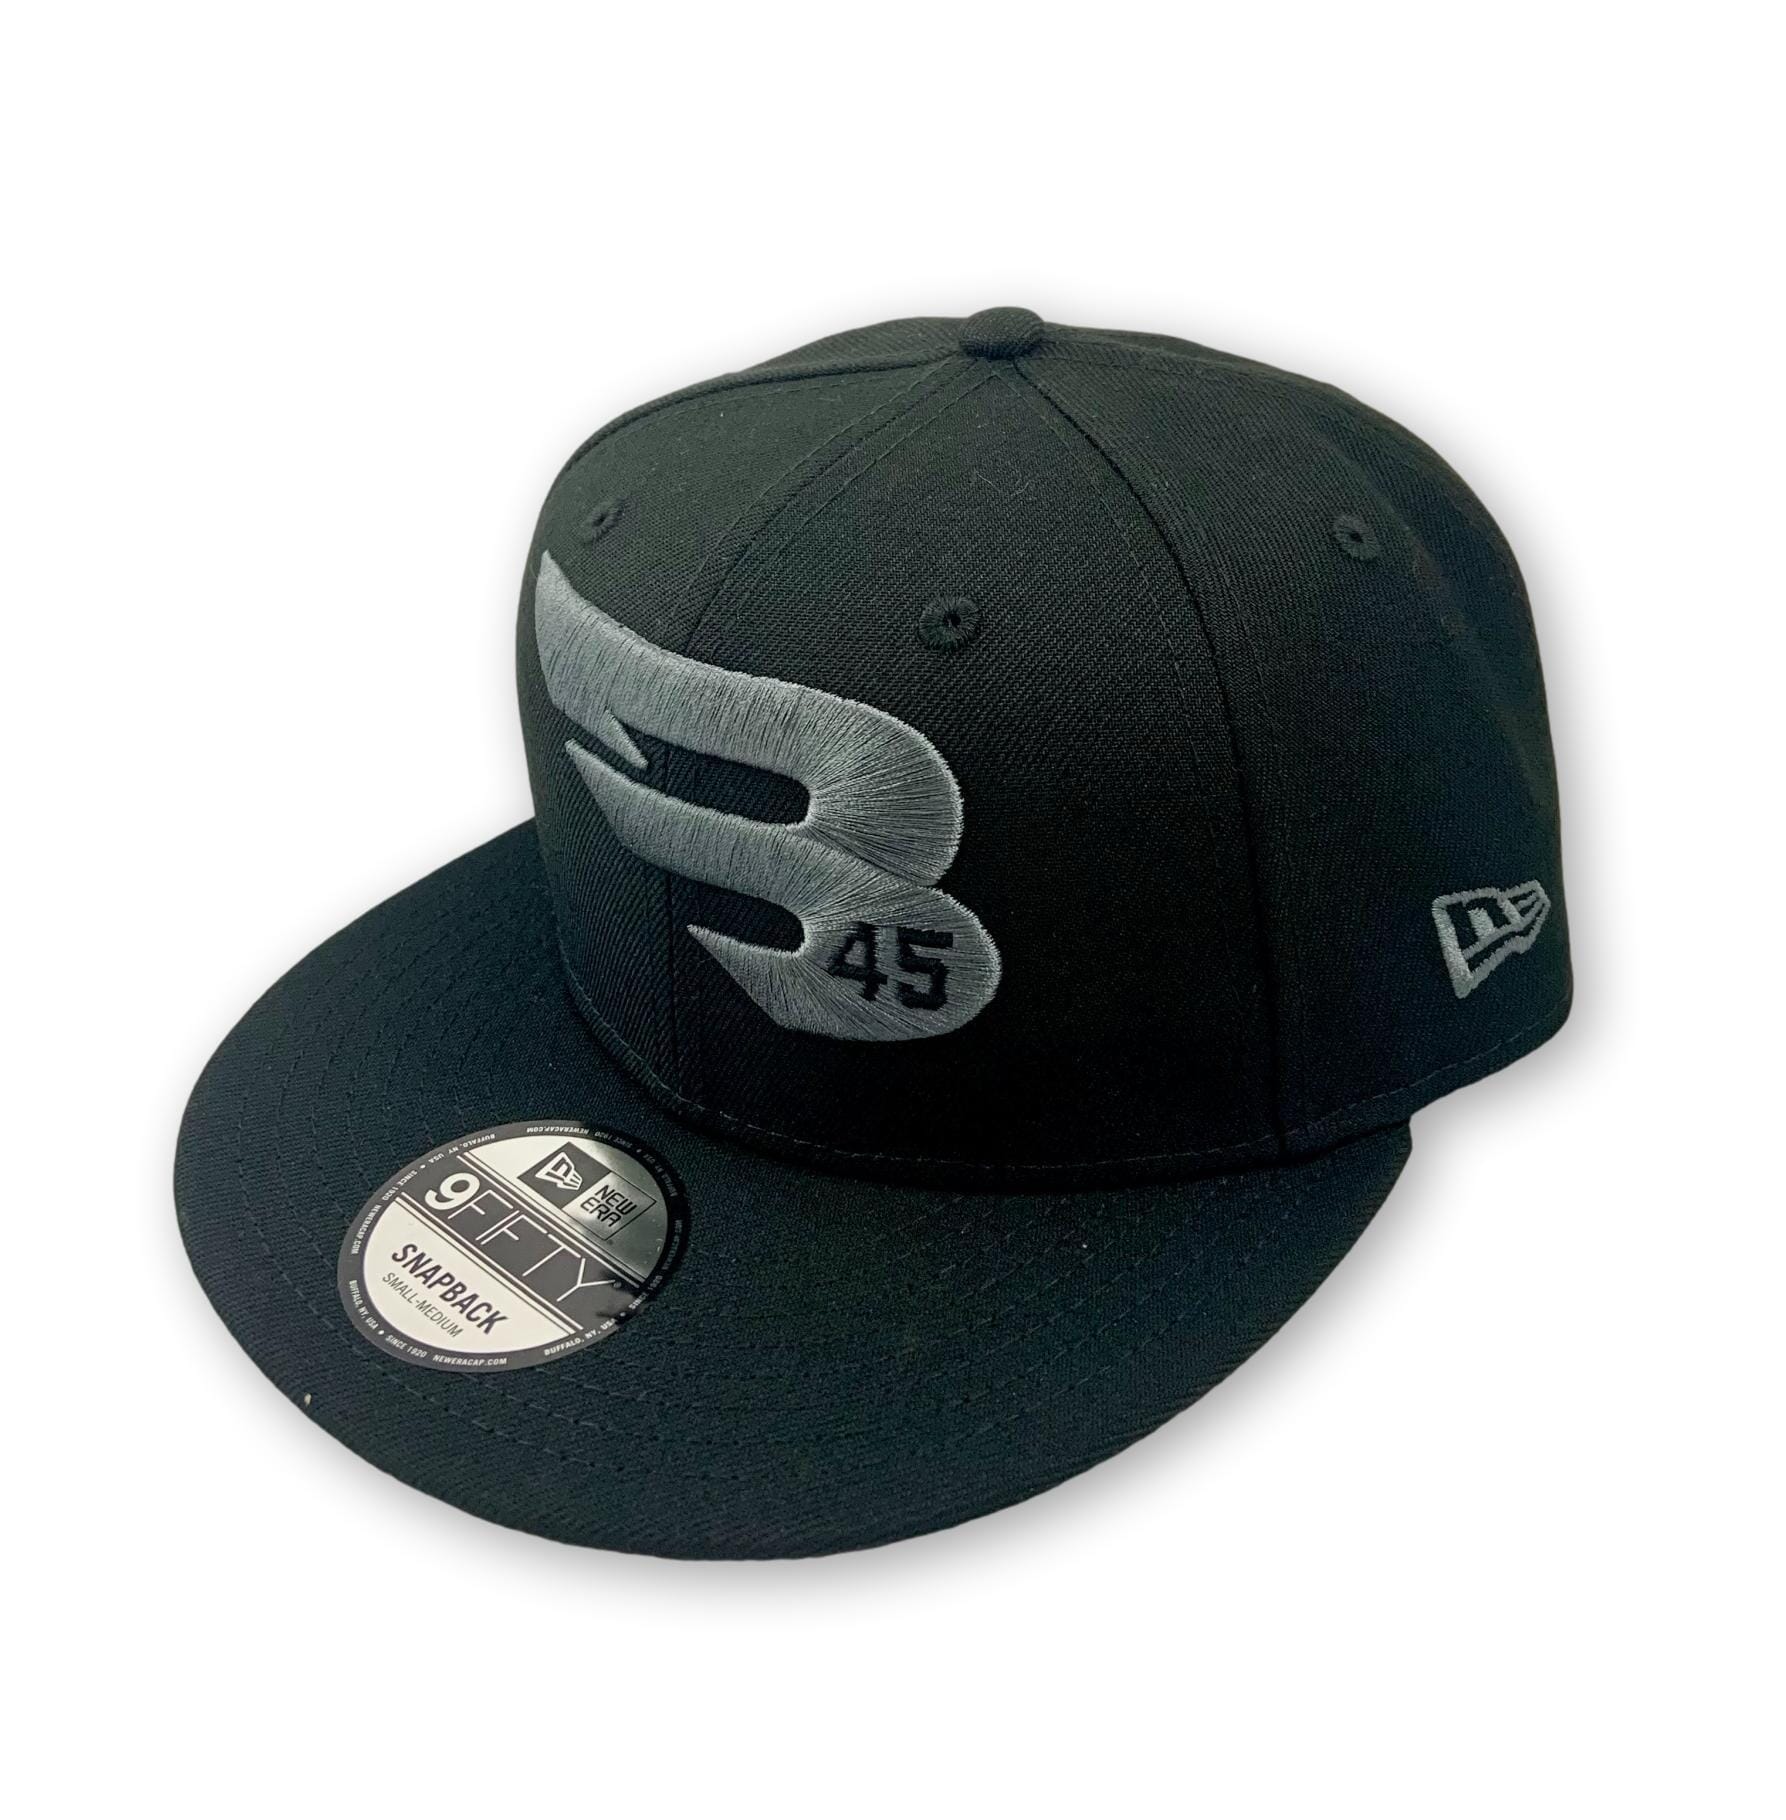 Black 9FIFTY New Era Snapback Hat - Charcoal Logo Edition